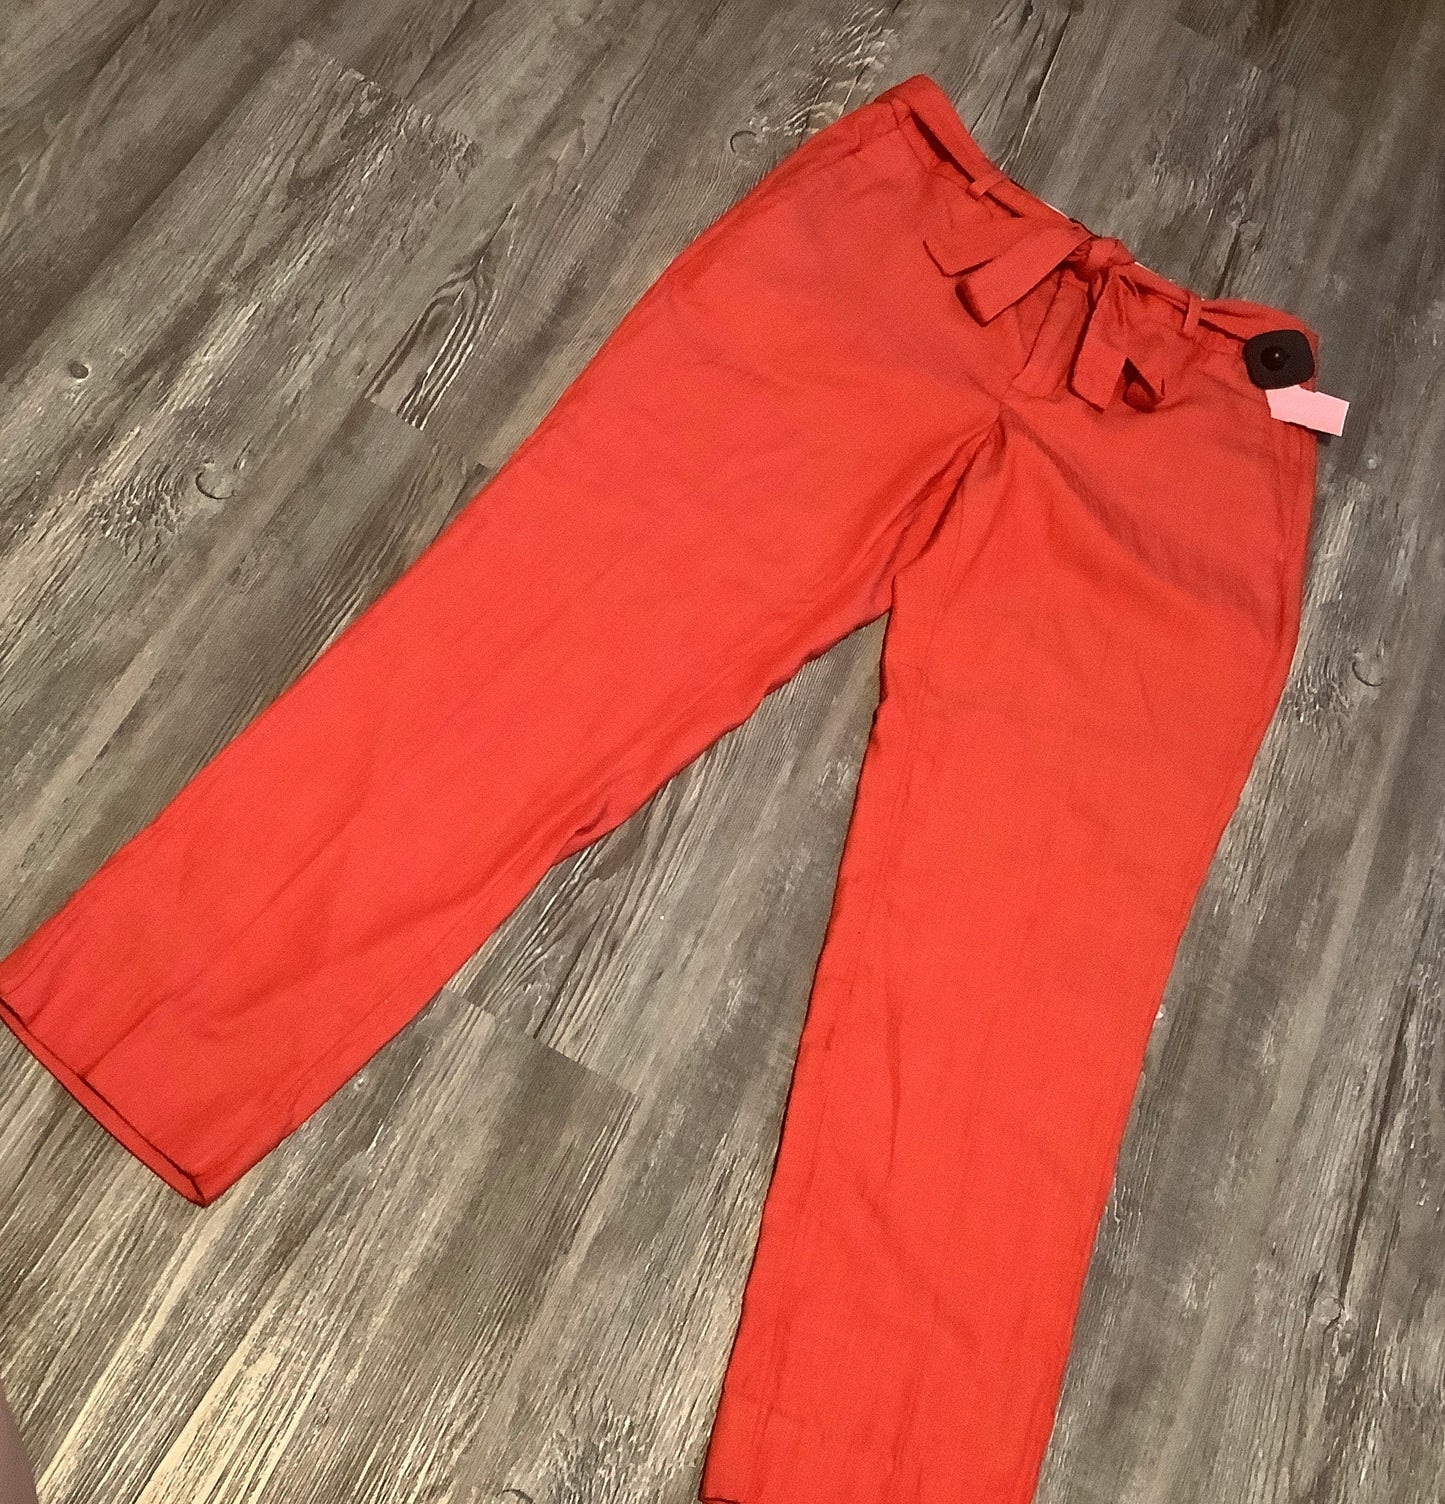 Red Pants Dress Banana Republic, Size 4